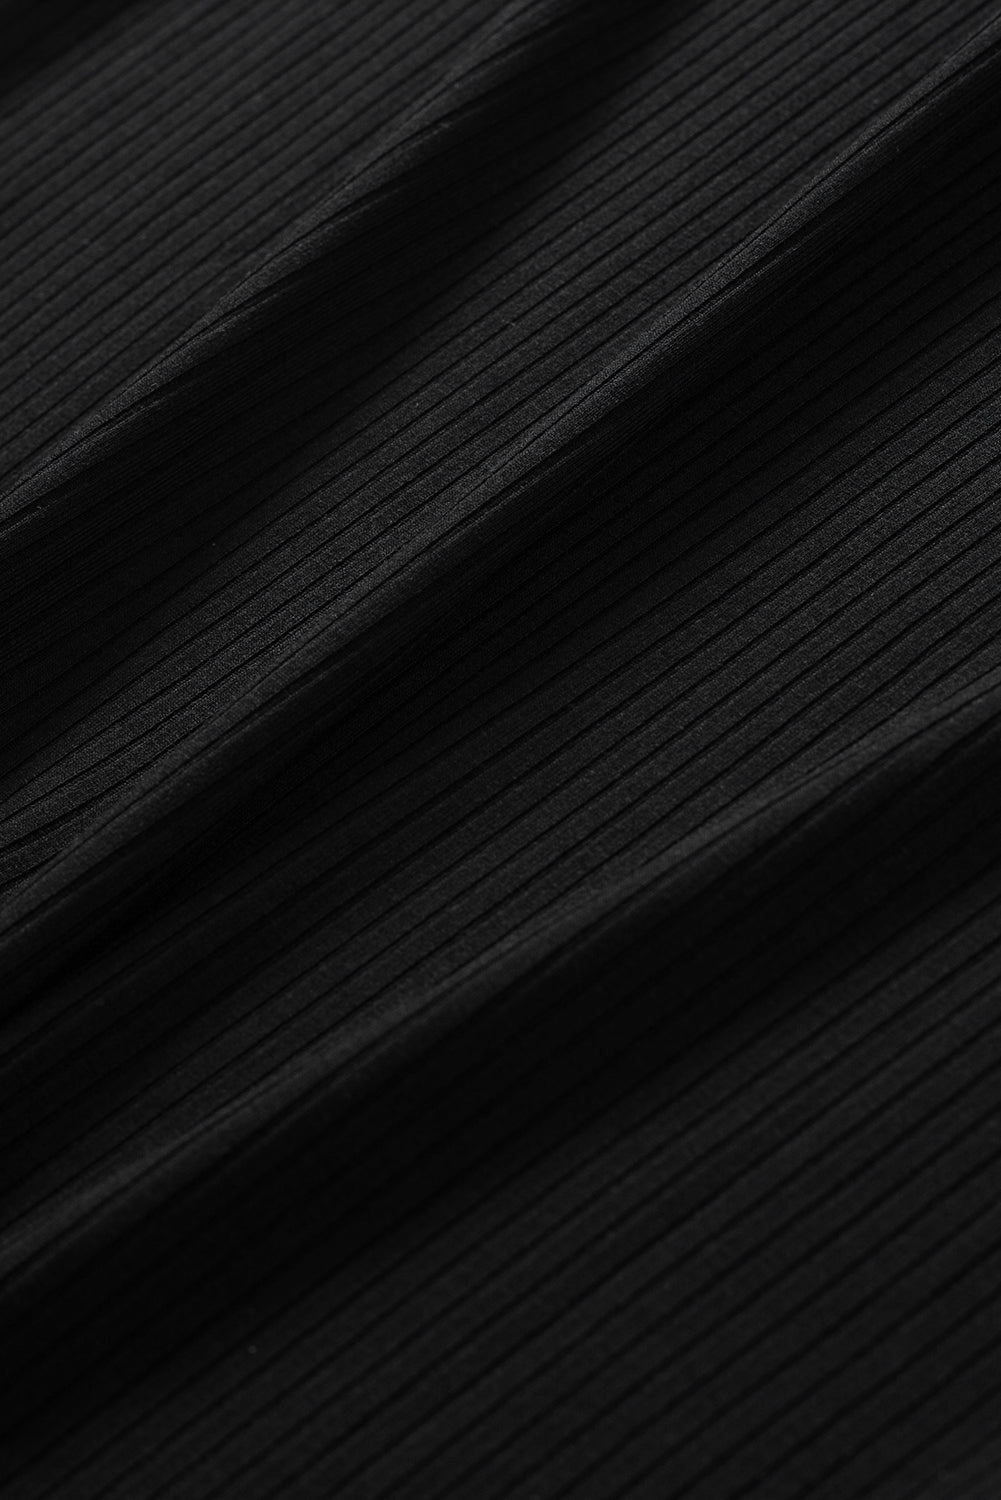 Black Ribbed Sleeveless One Shoulder Black Mini Dress for Women LC619641-2